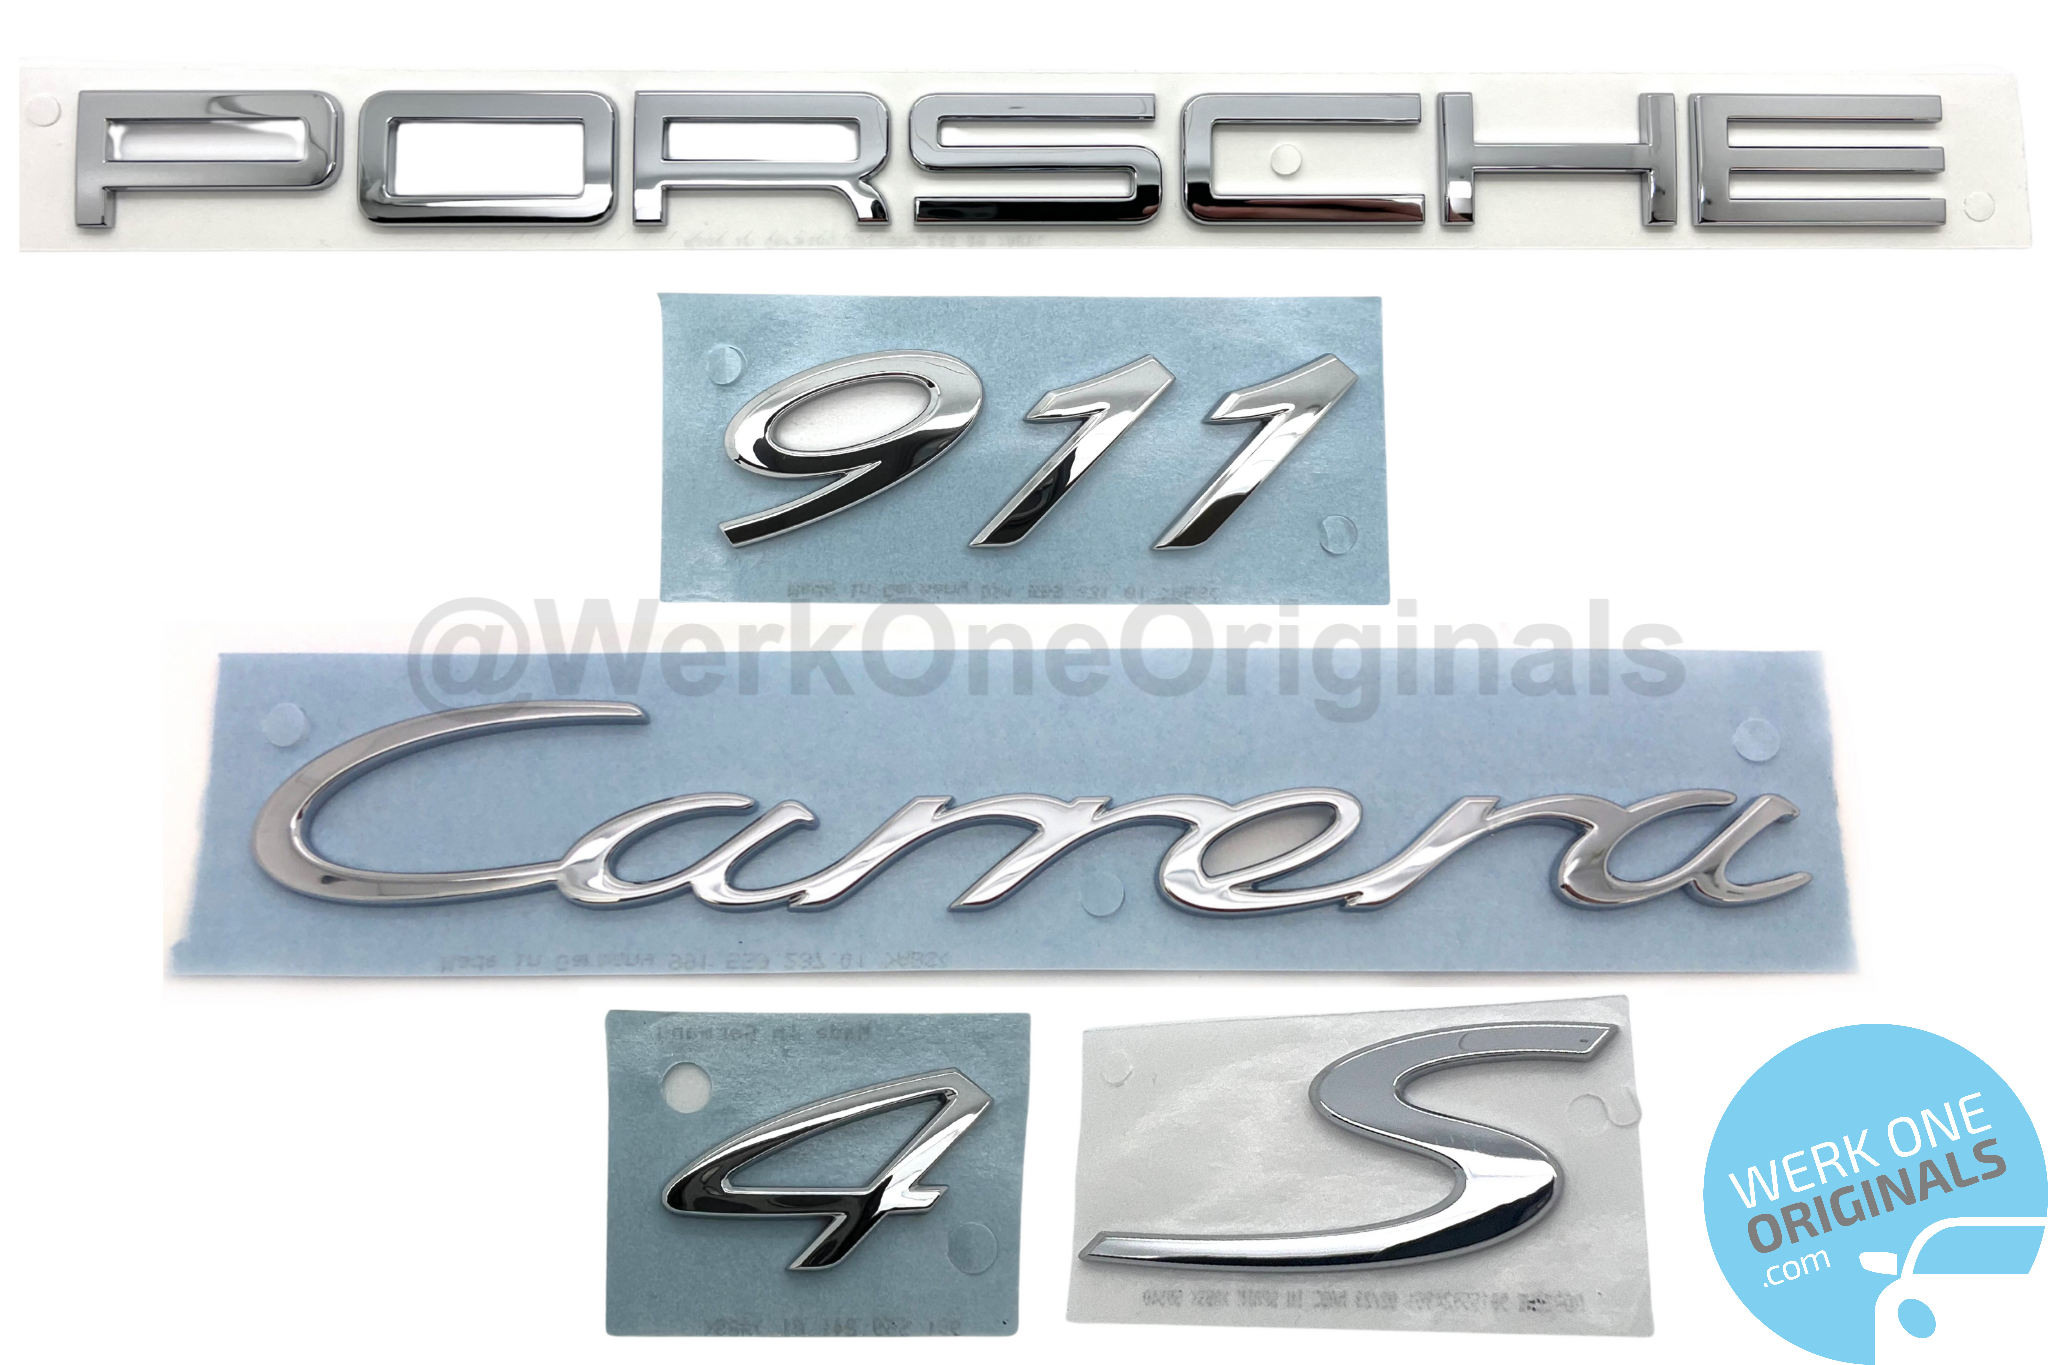 Porsche Official 'Porsche 911 Carrera 4S' Rear Badge Decal in Chrome Silver for 911 Type 991 Carrera 4S Models